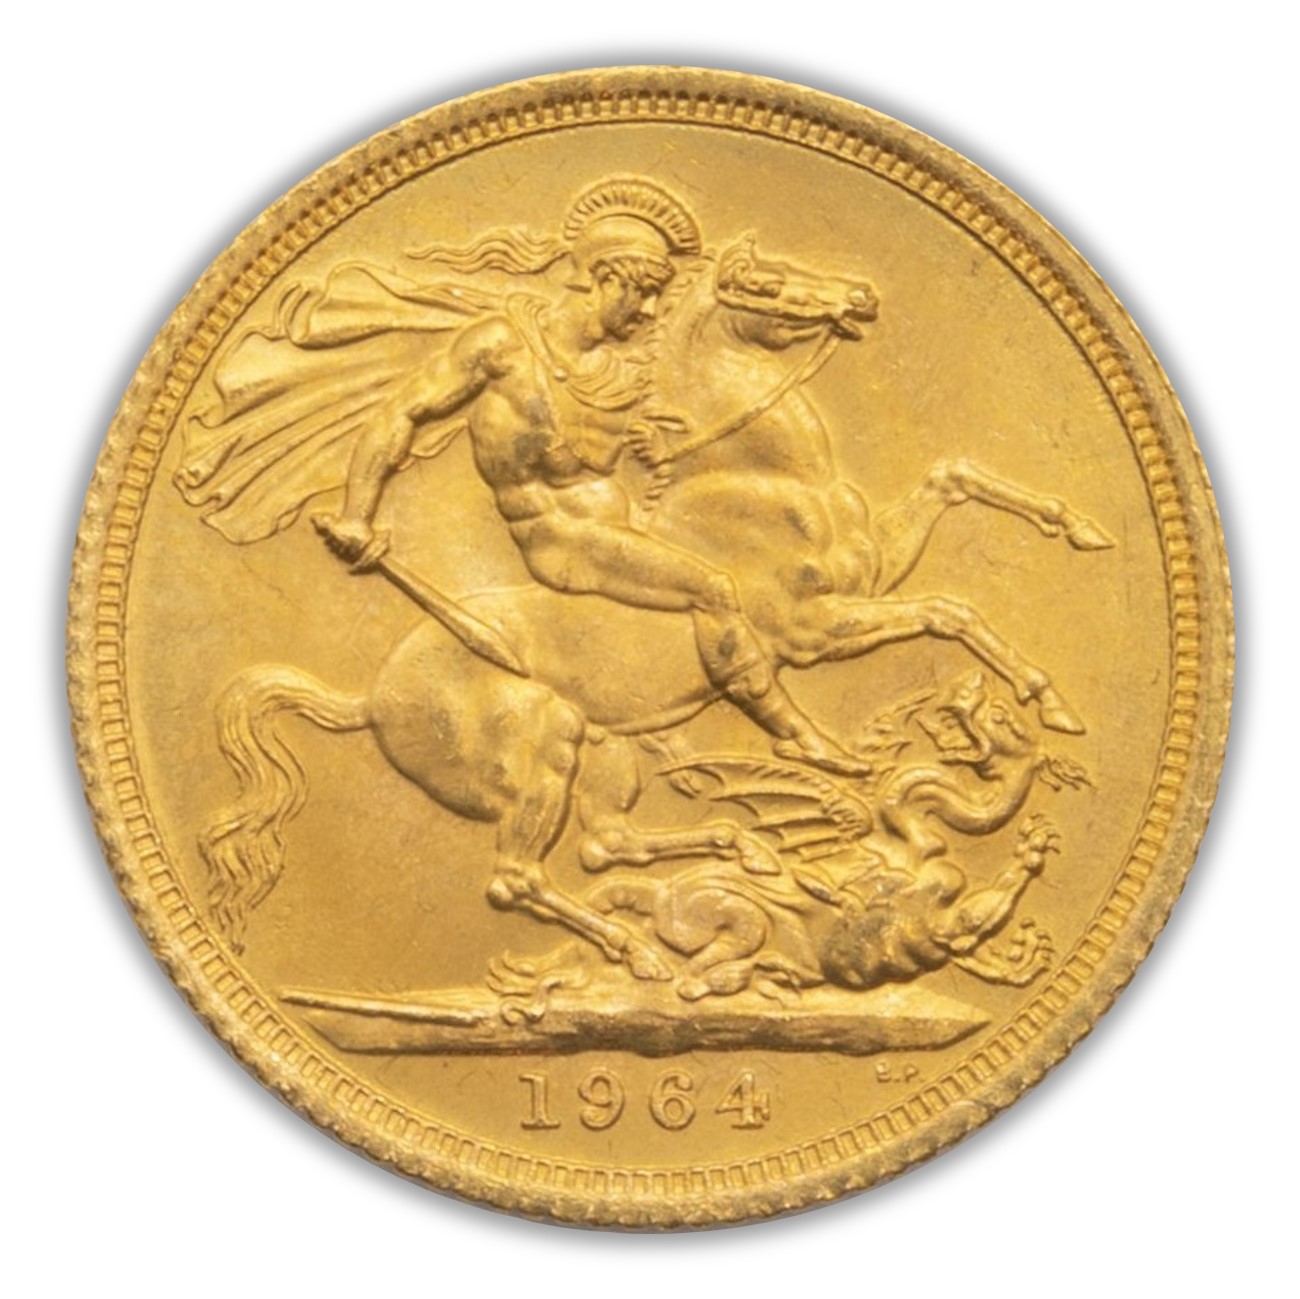 1964 British Sovereign Gold Coin